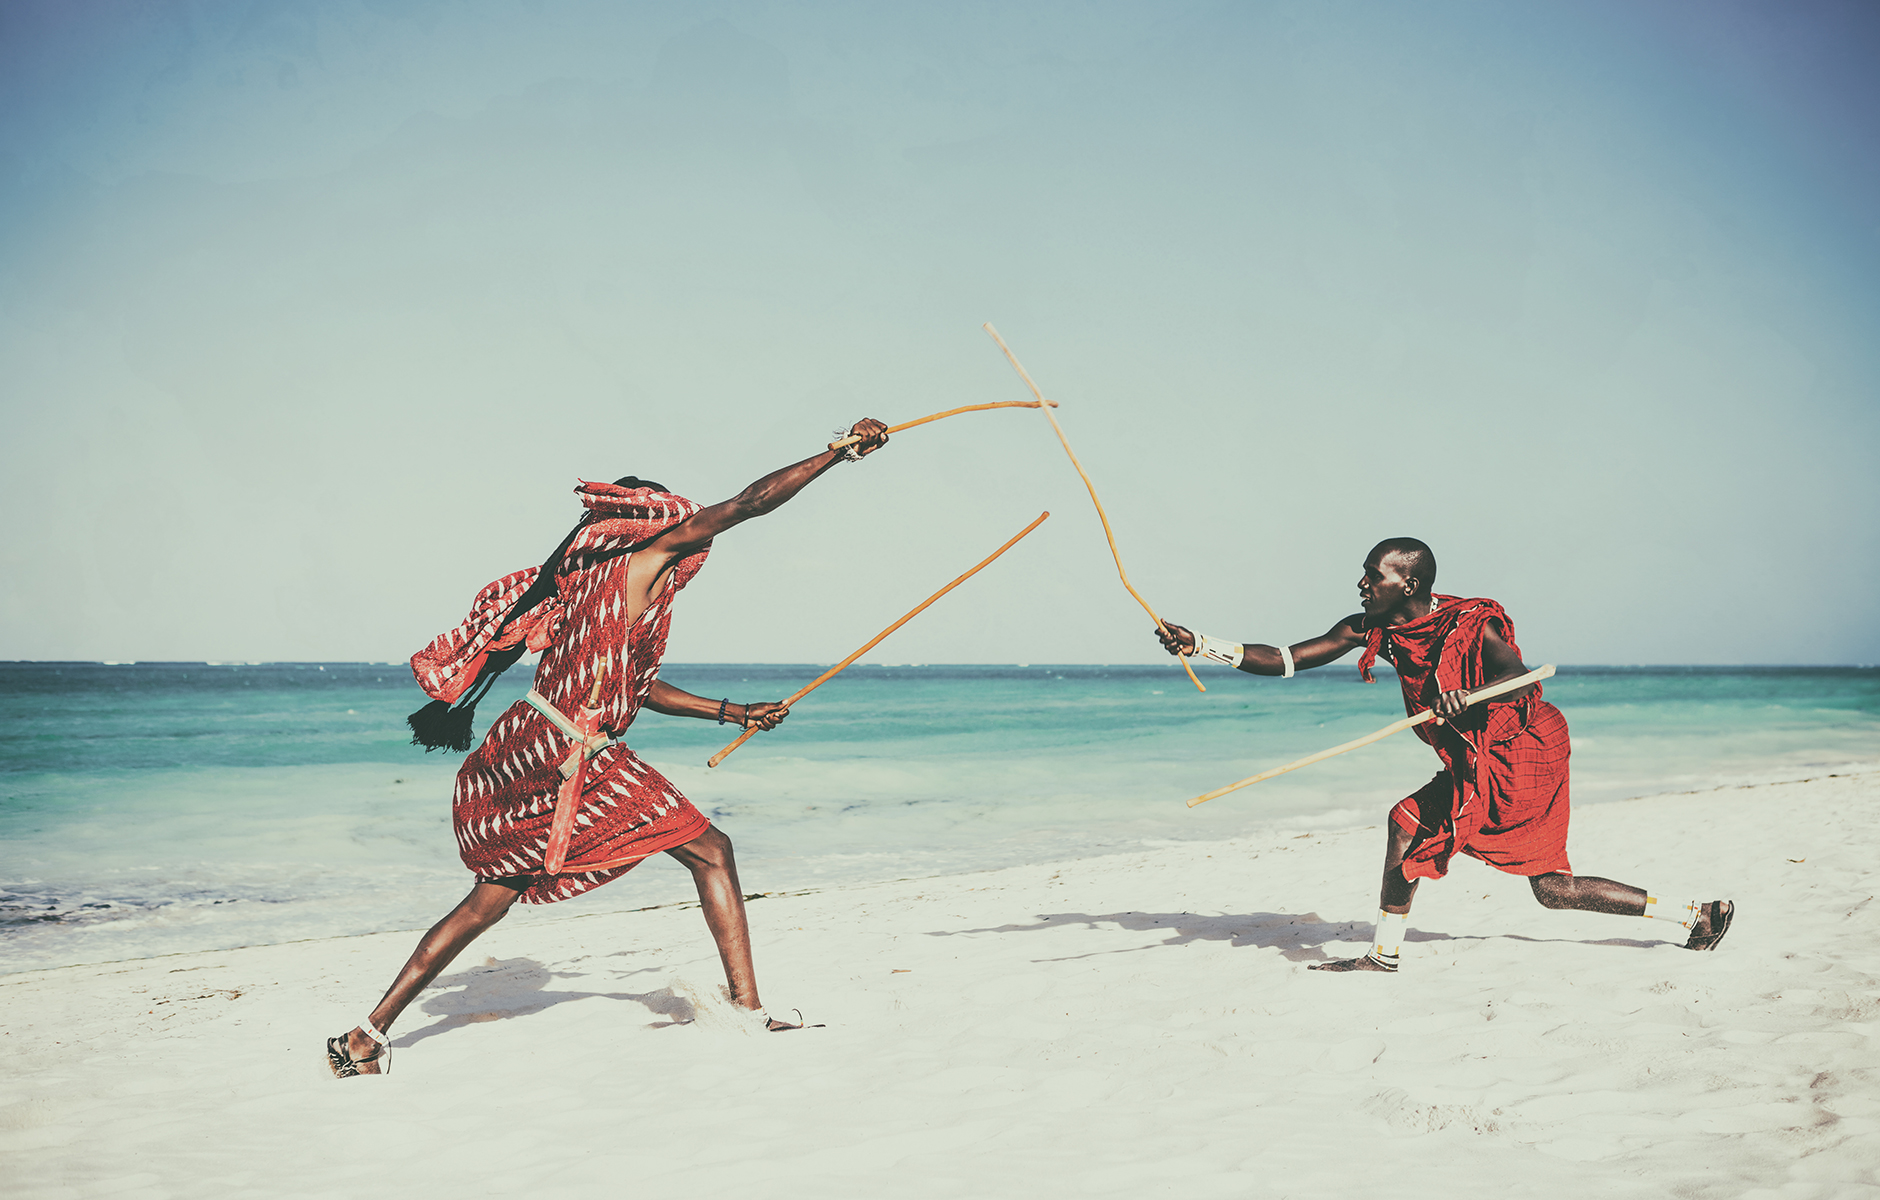 Masai-Krieger führen Showkampf am Strand aus